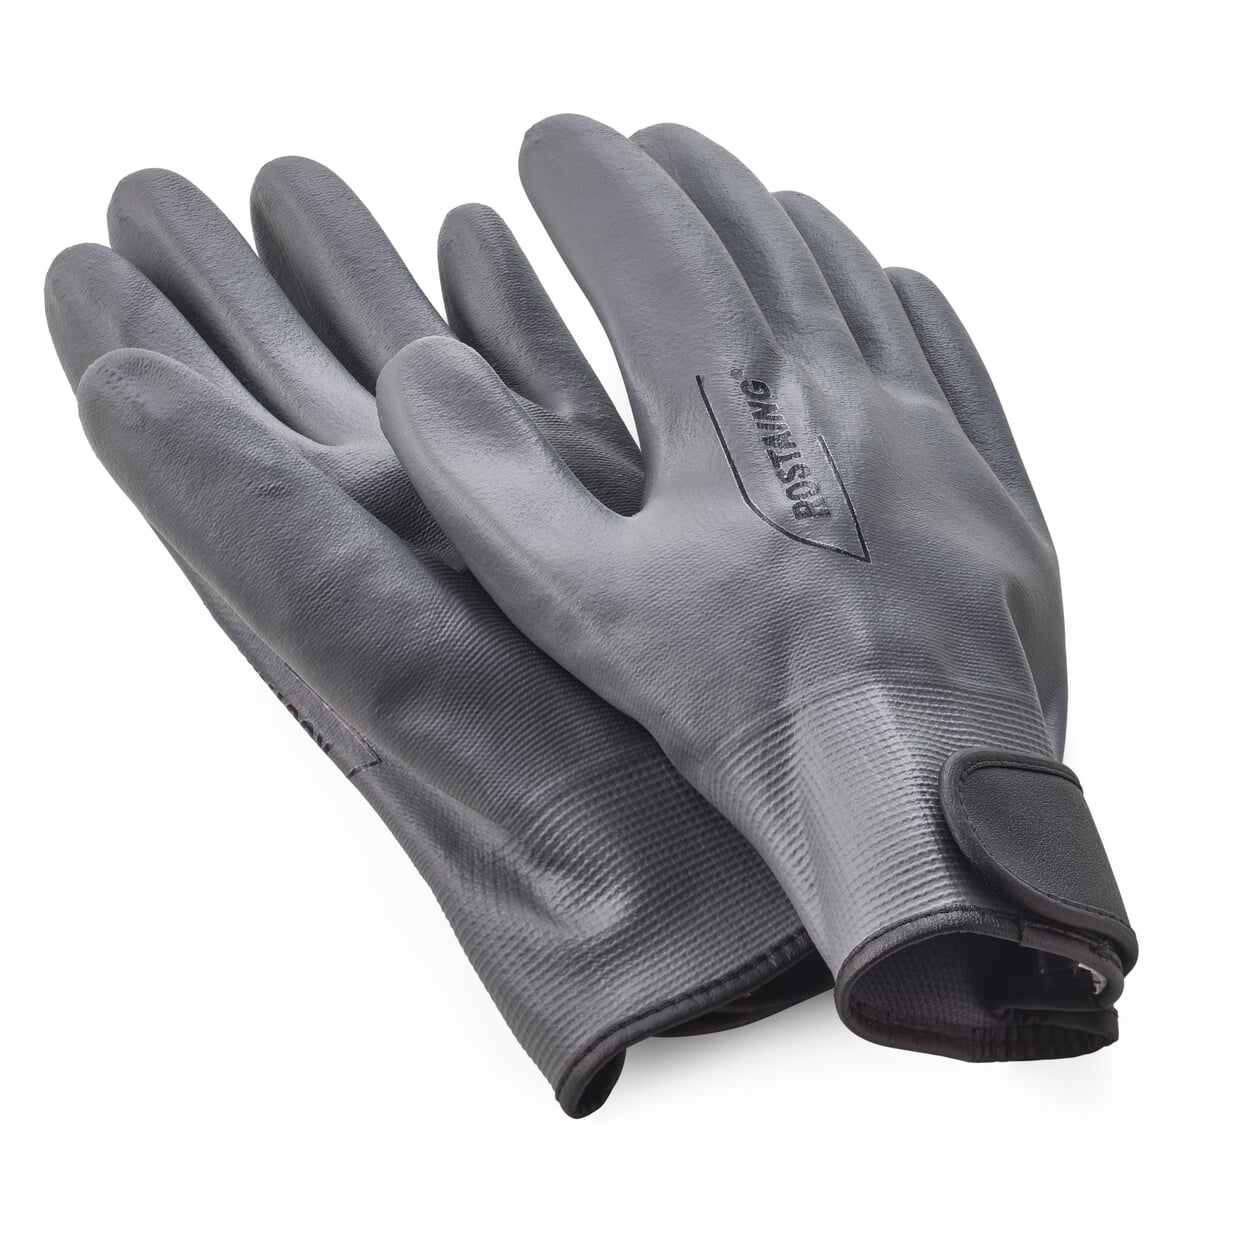 Work glove waterproof